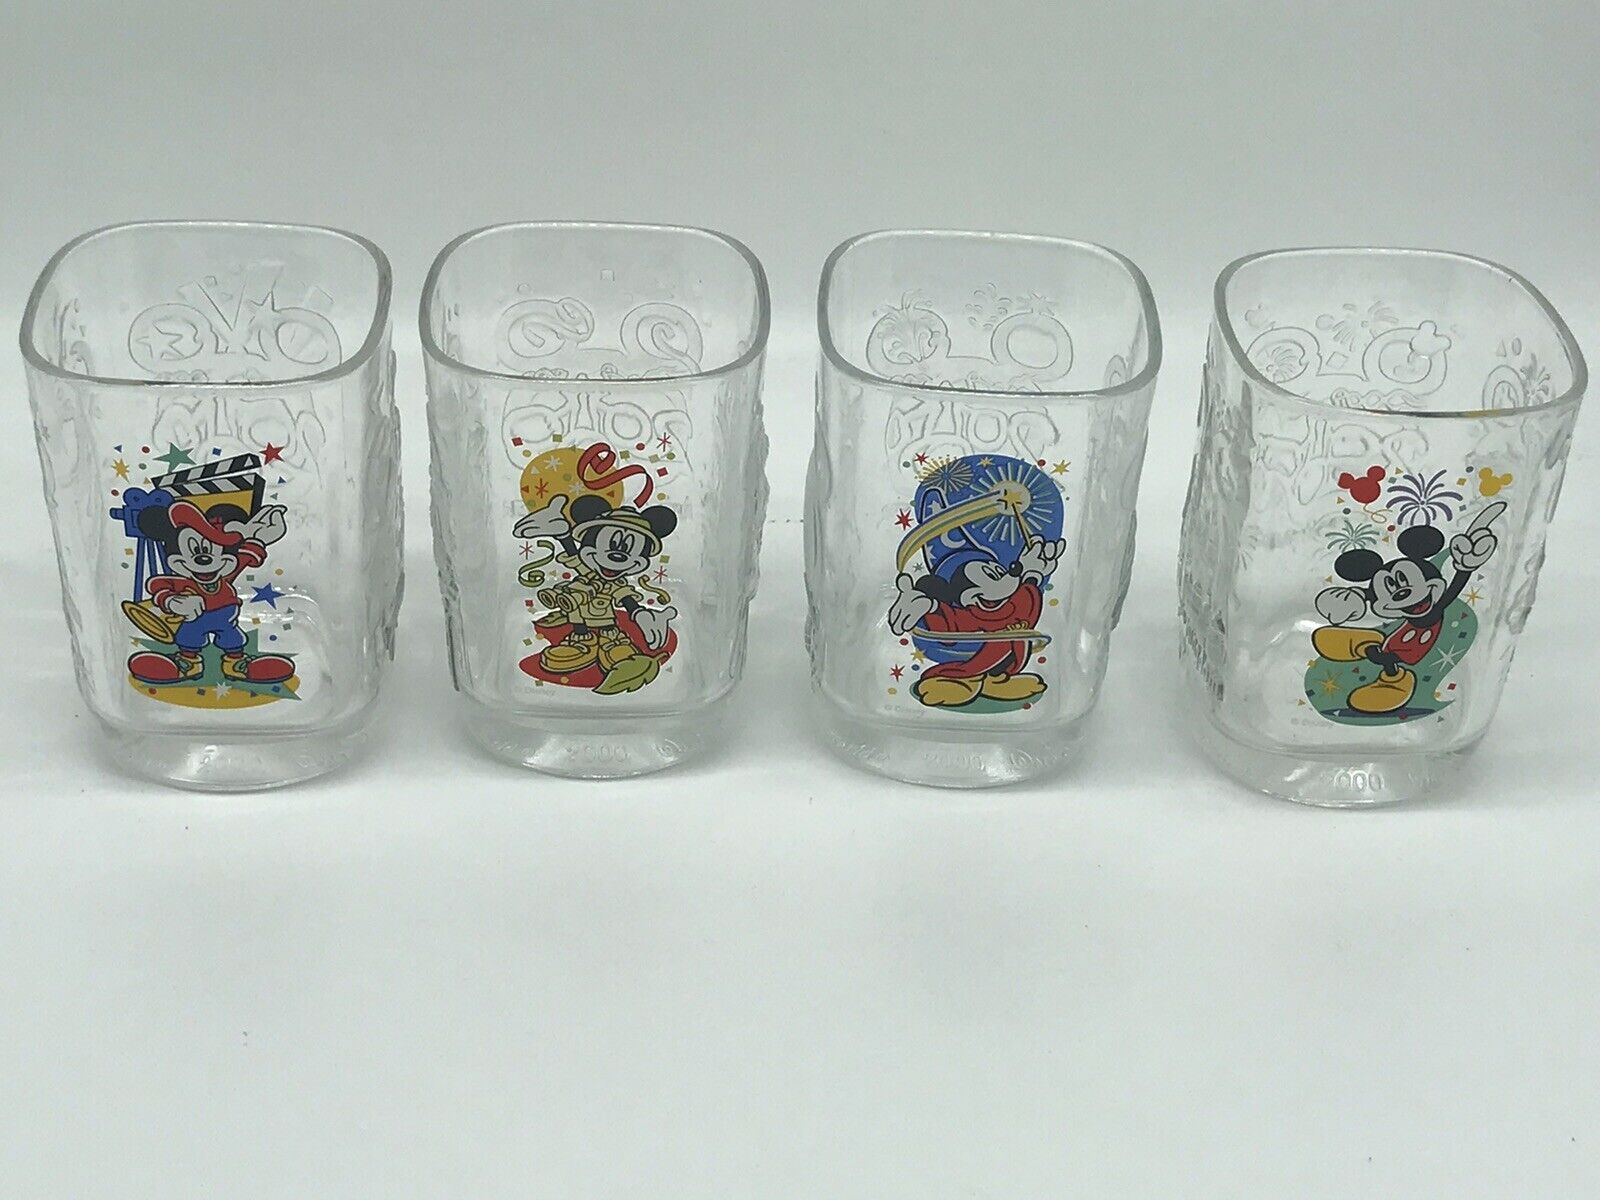 McDONALDS Disney World 100 Years of Magic 25th Anniversary Cups Glasses Set of 4